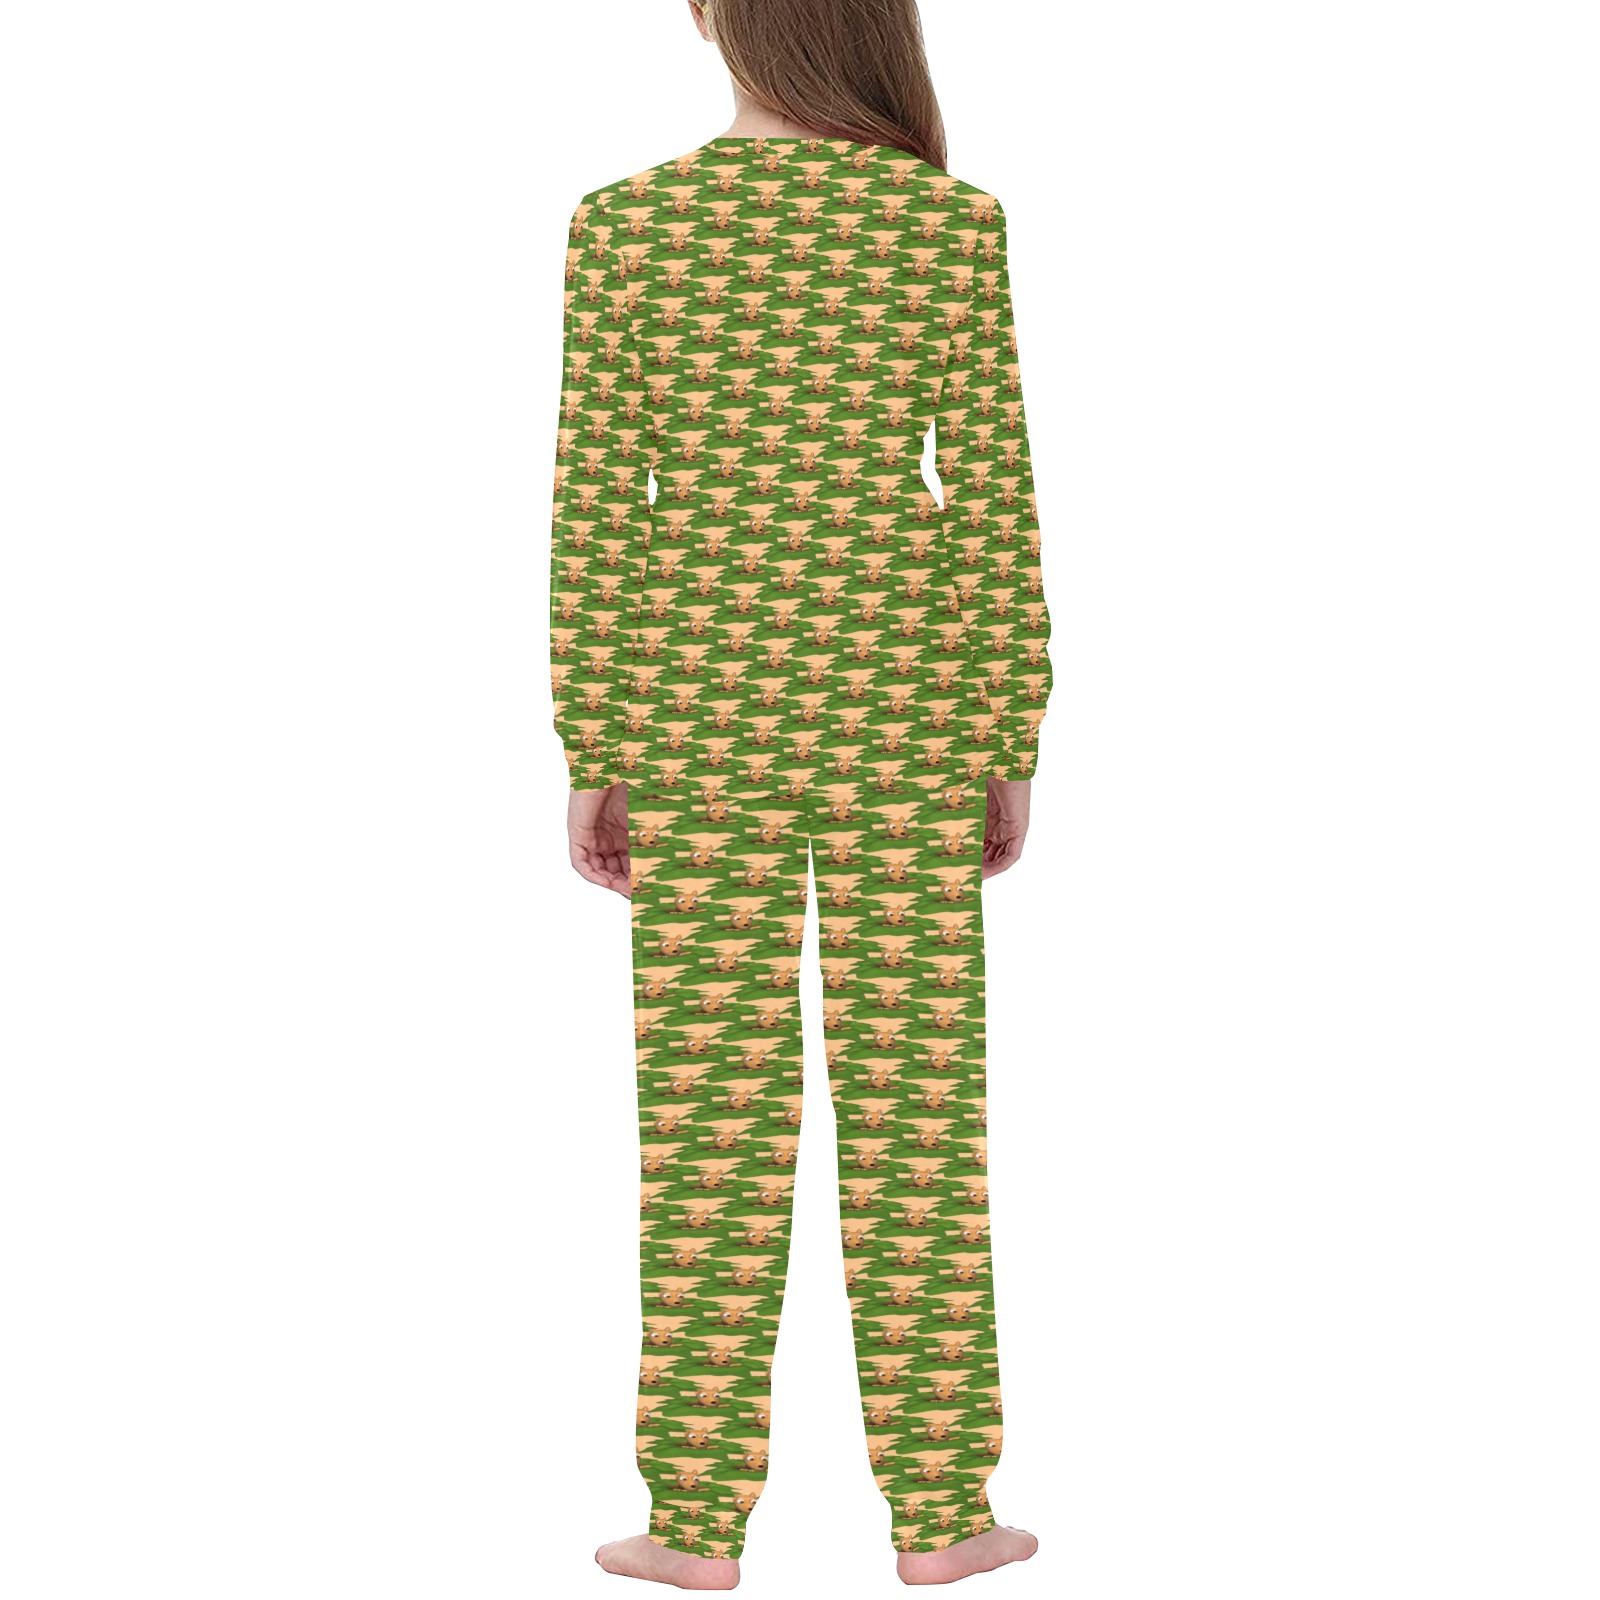 pattern (31) Kids' All Over Print Pajama Set